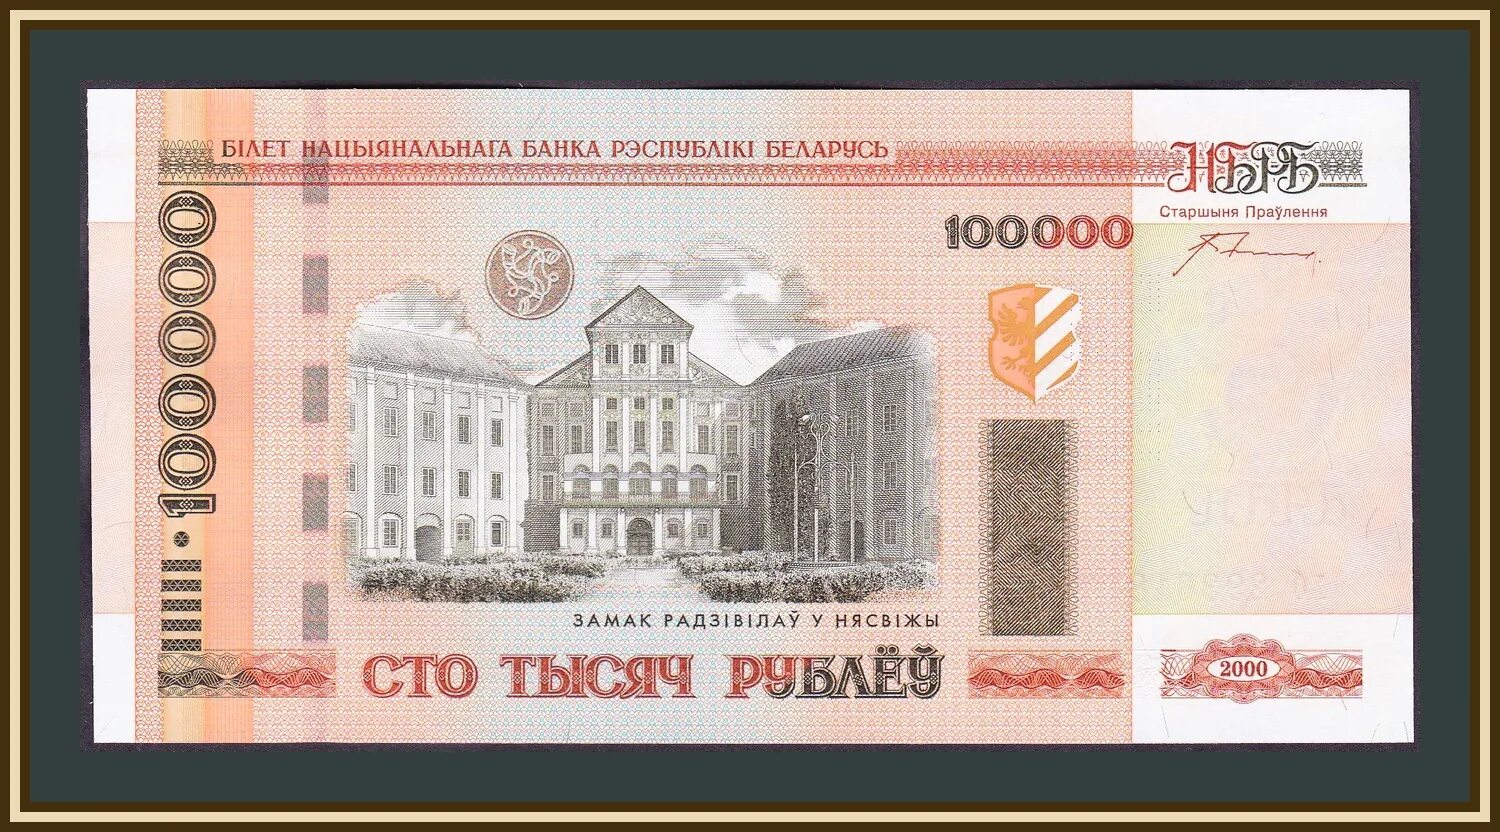 Беларусь купюры 100000 2000. 100 Белорусских рублей 2000. 100000 Белорусских рублей 2000 года. Белорусская купюра 100000 рублей 2000 года.